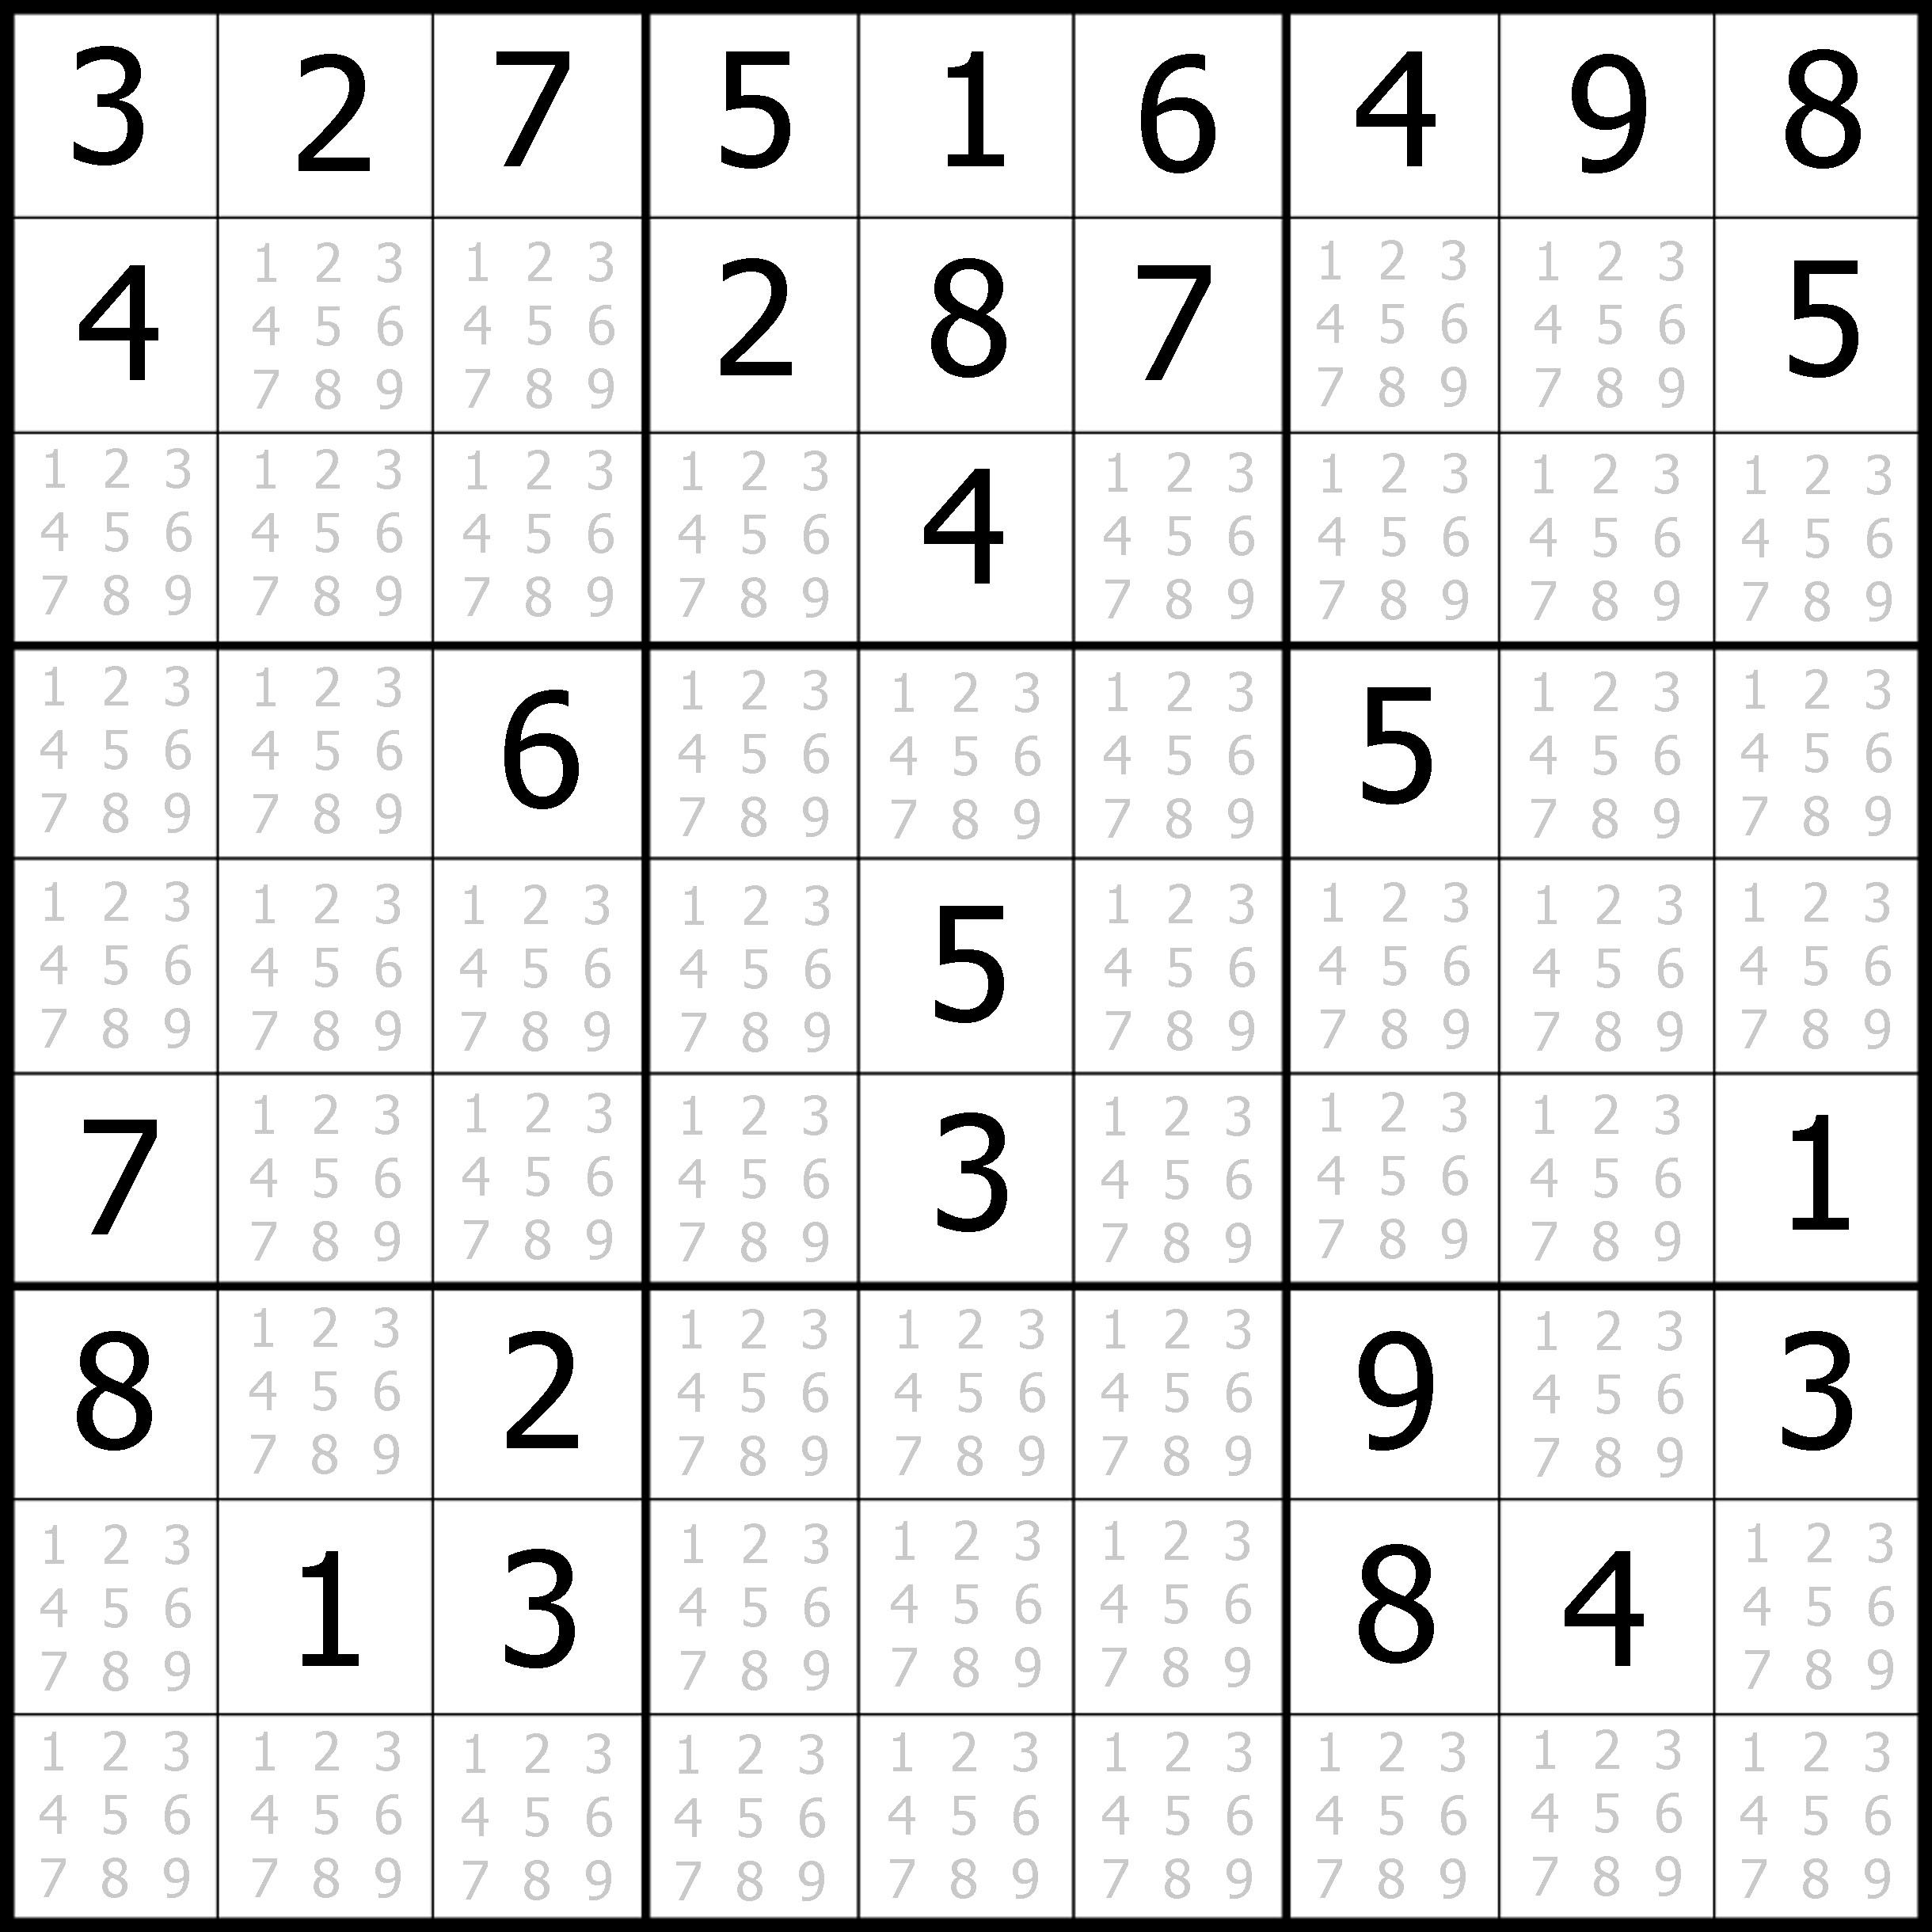 Sudoku Free Printable Worksheets